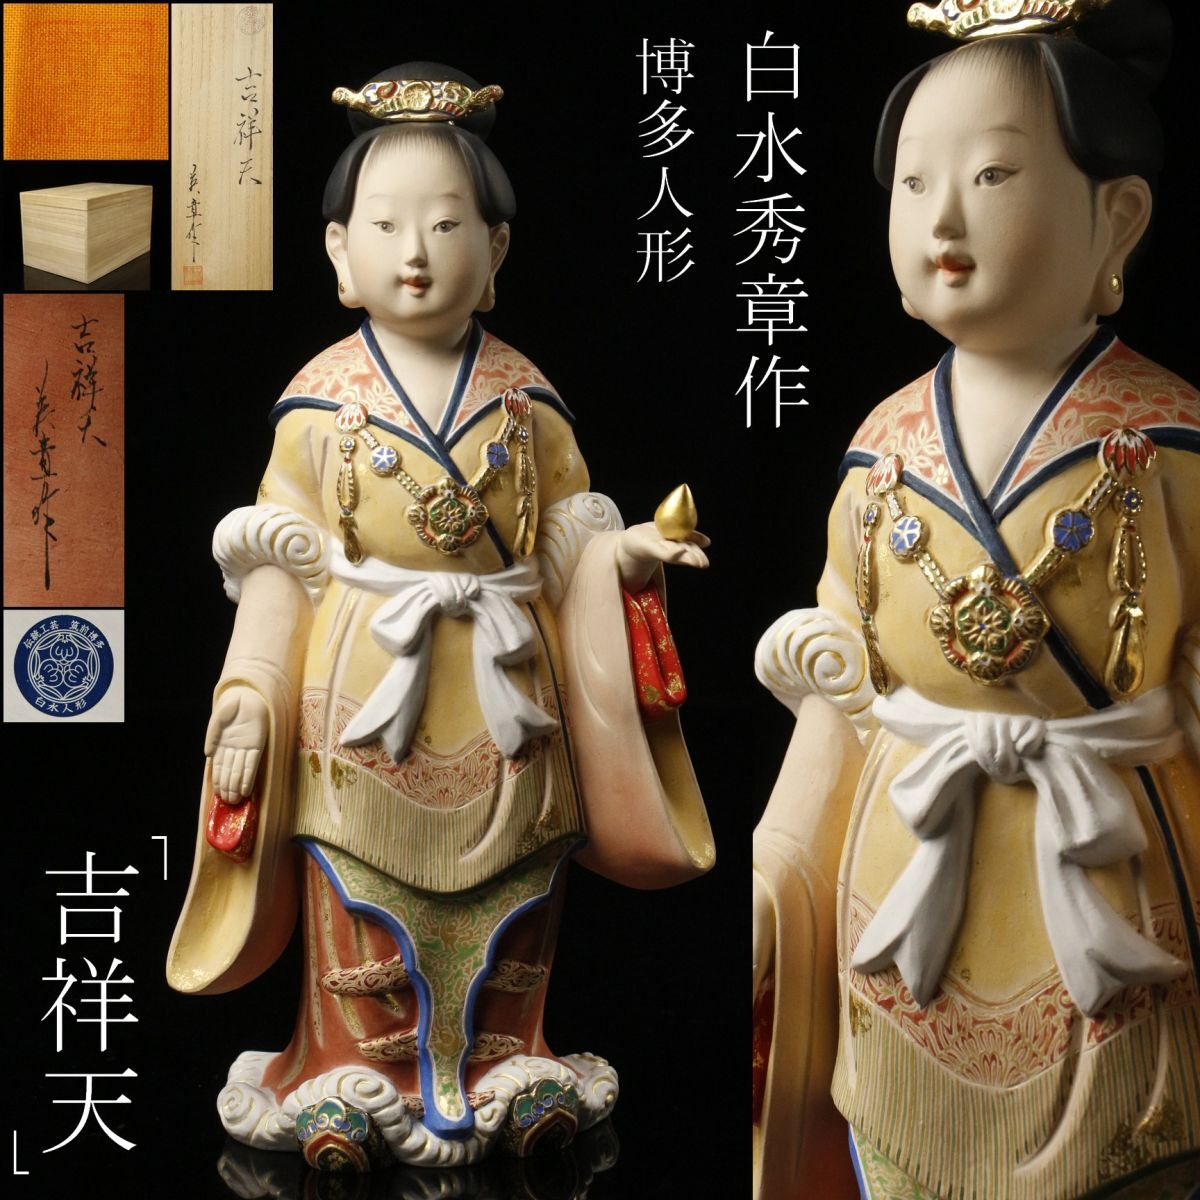 [LIG].. doll shop . flat white water preeminence chapter work Hakata doll [.. heaven ] 28.5. also cloth also box Japan industrial arts . regular member [.QQ]24.4